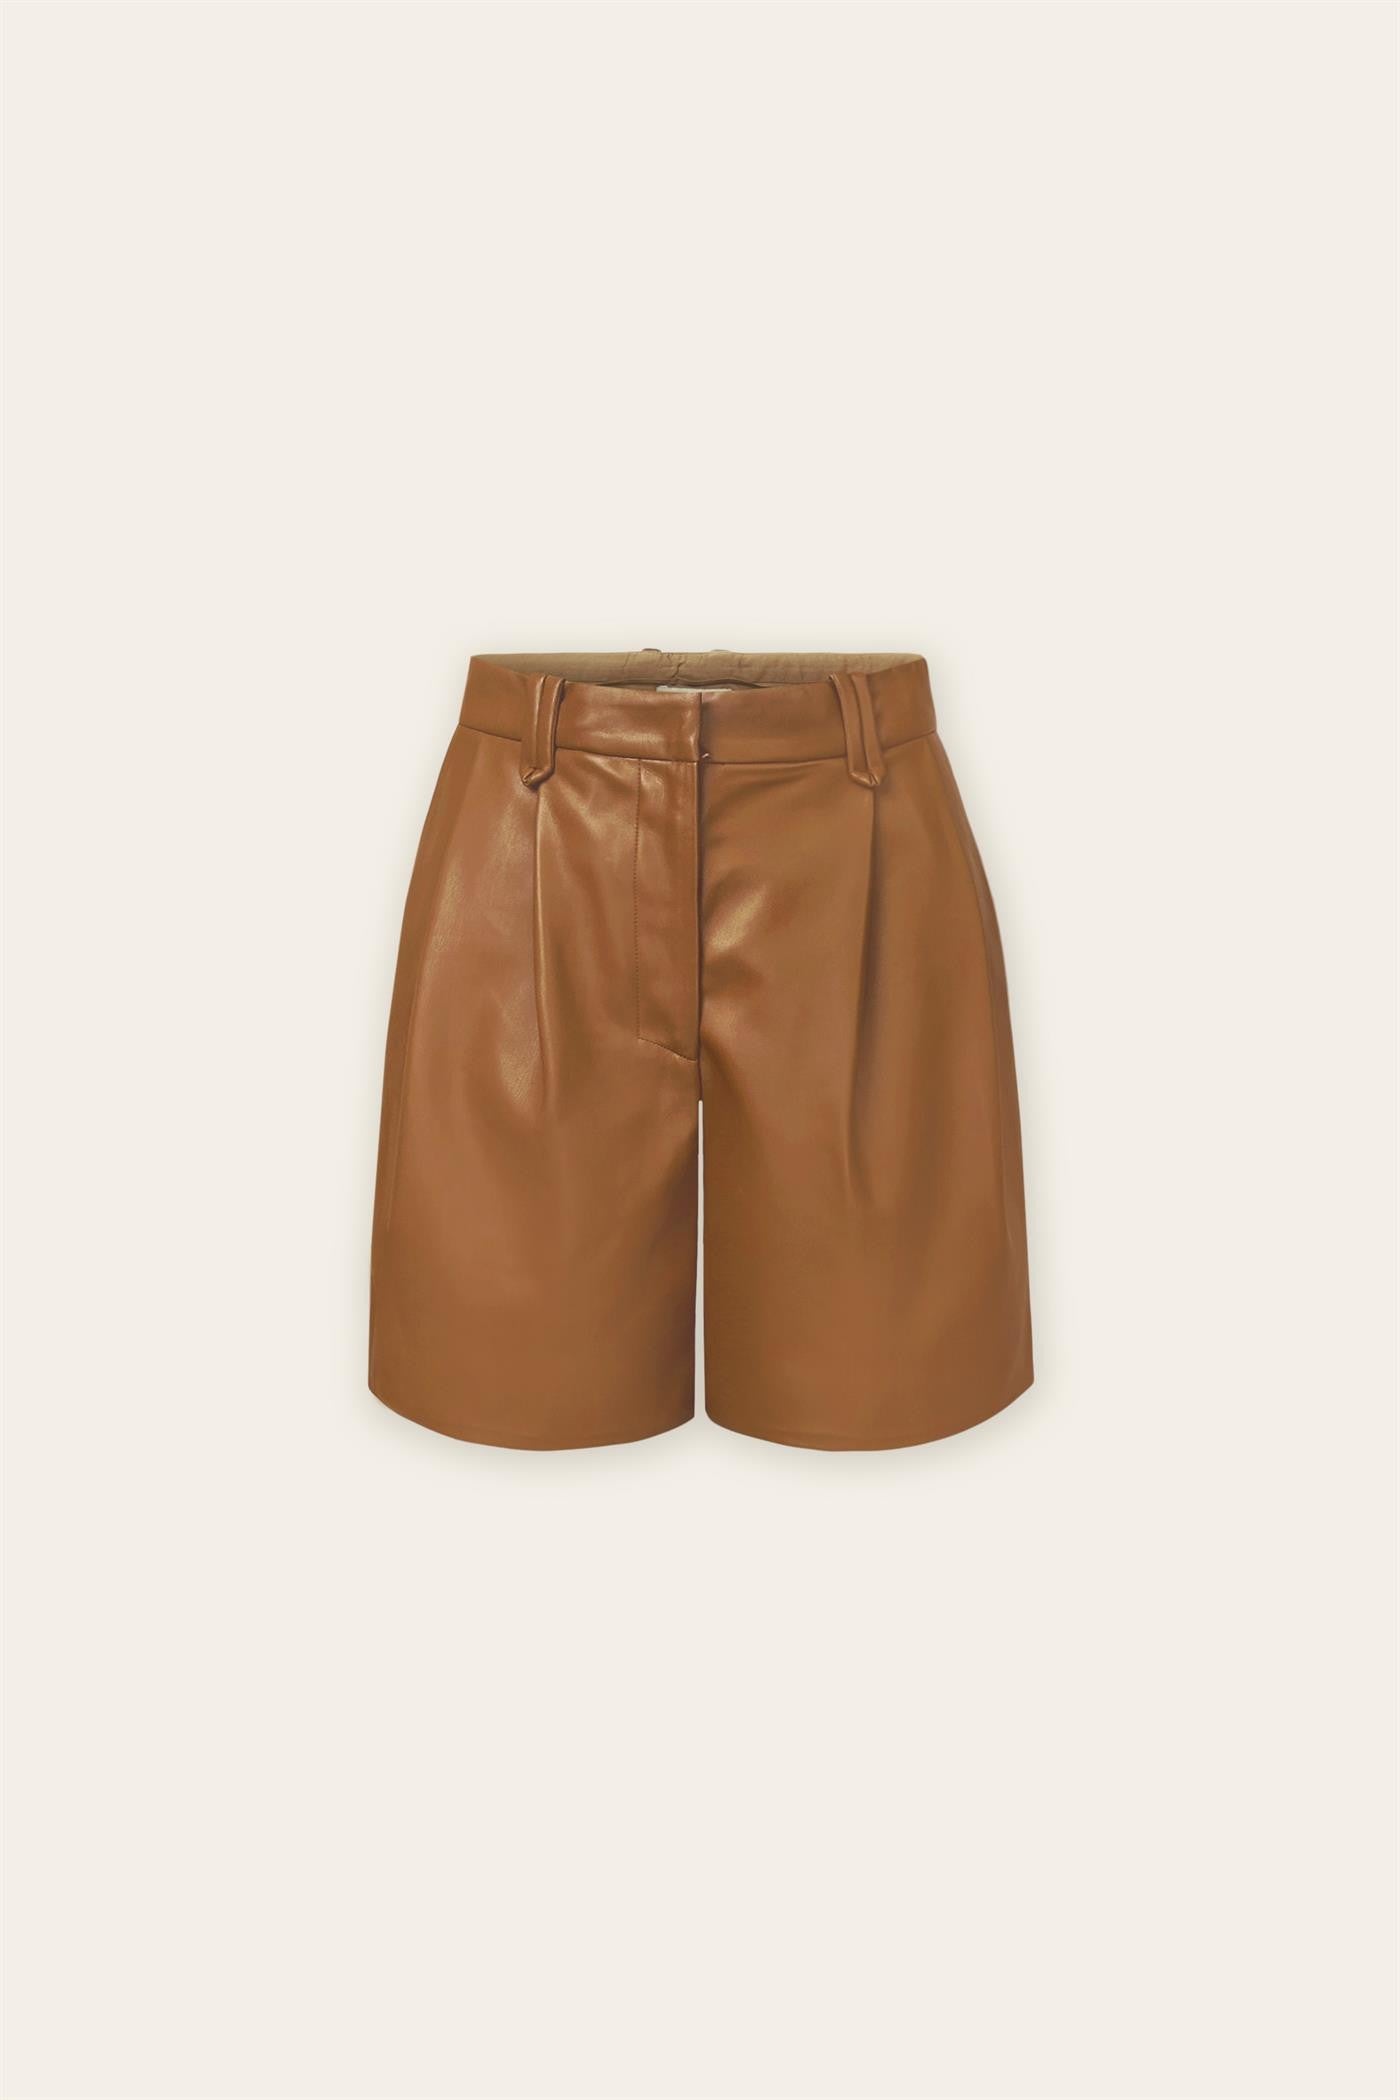 Chicago Vegan Leather Shorts